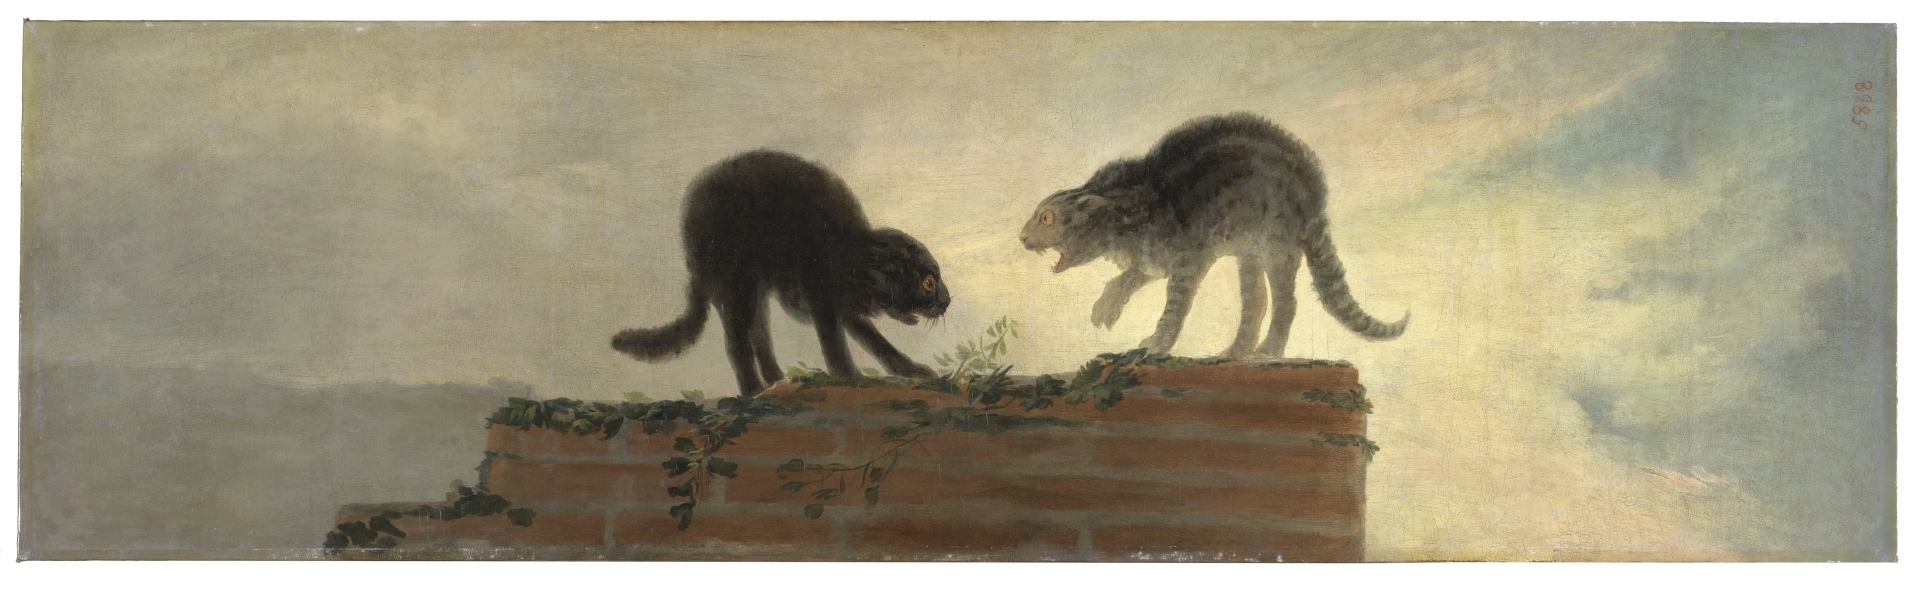 Goya cats fighting